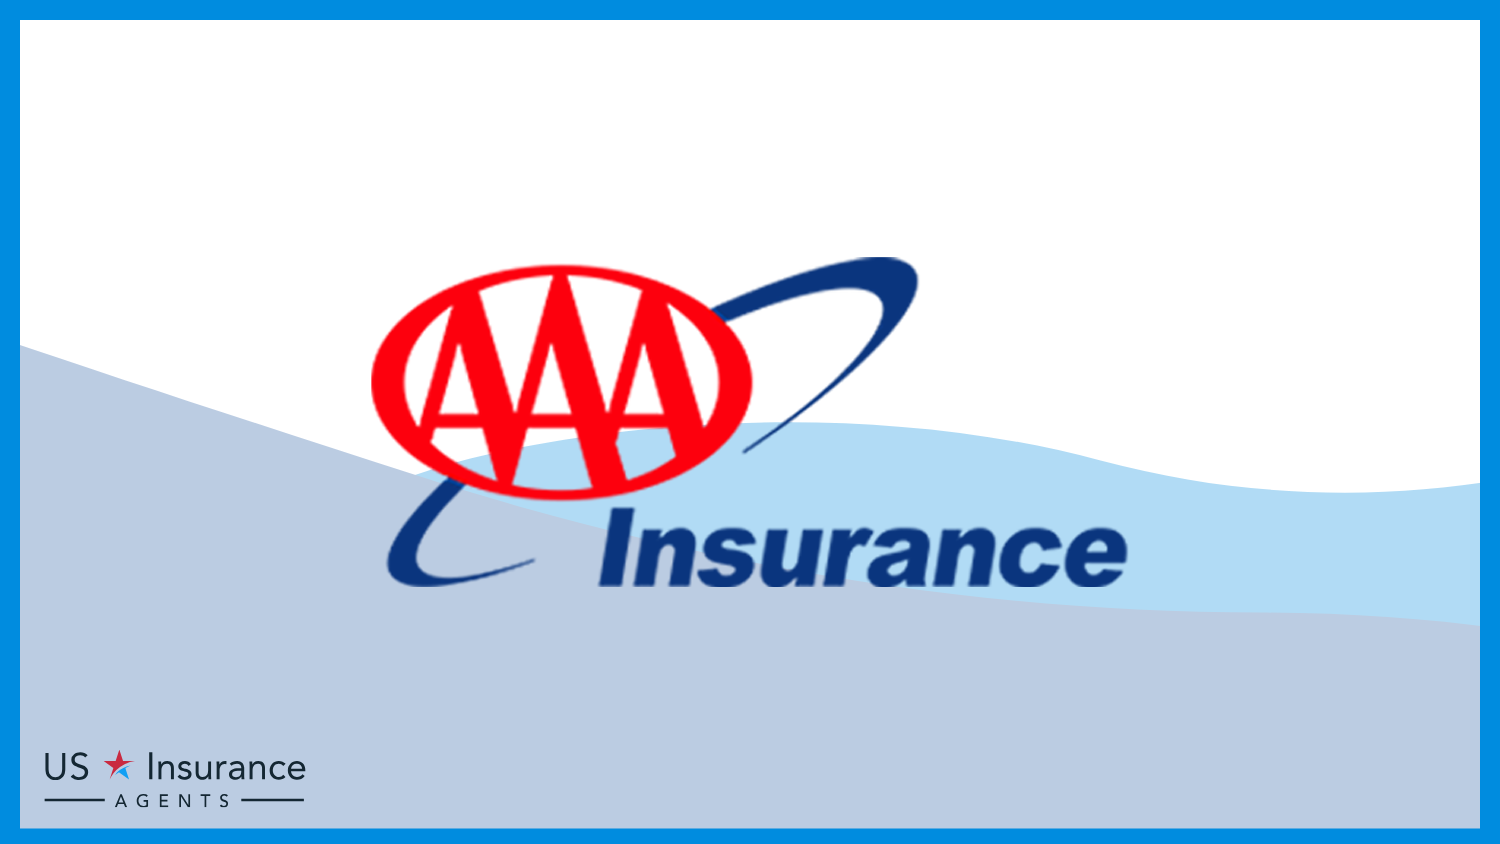 AAA: Best Car Insurance for Doctors